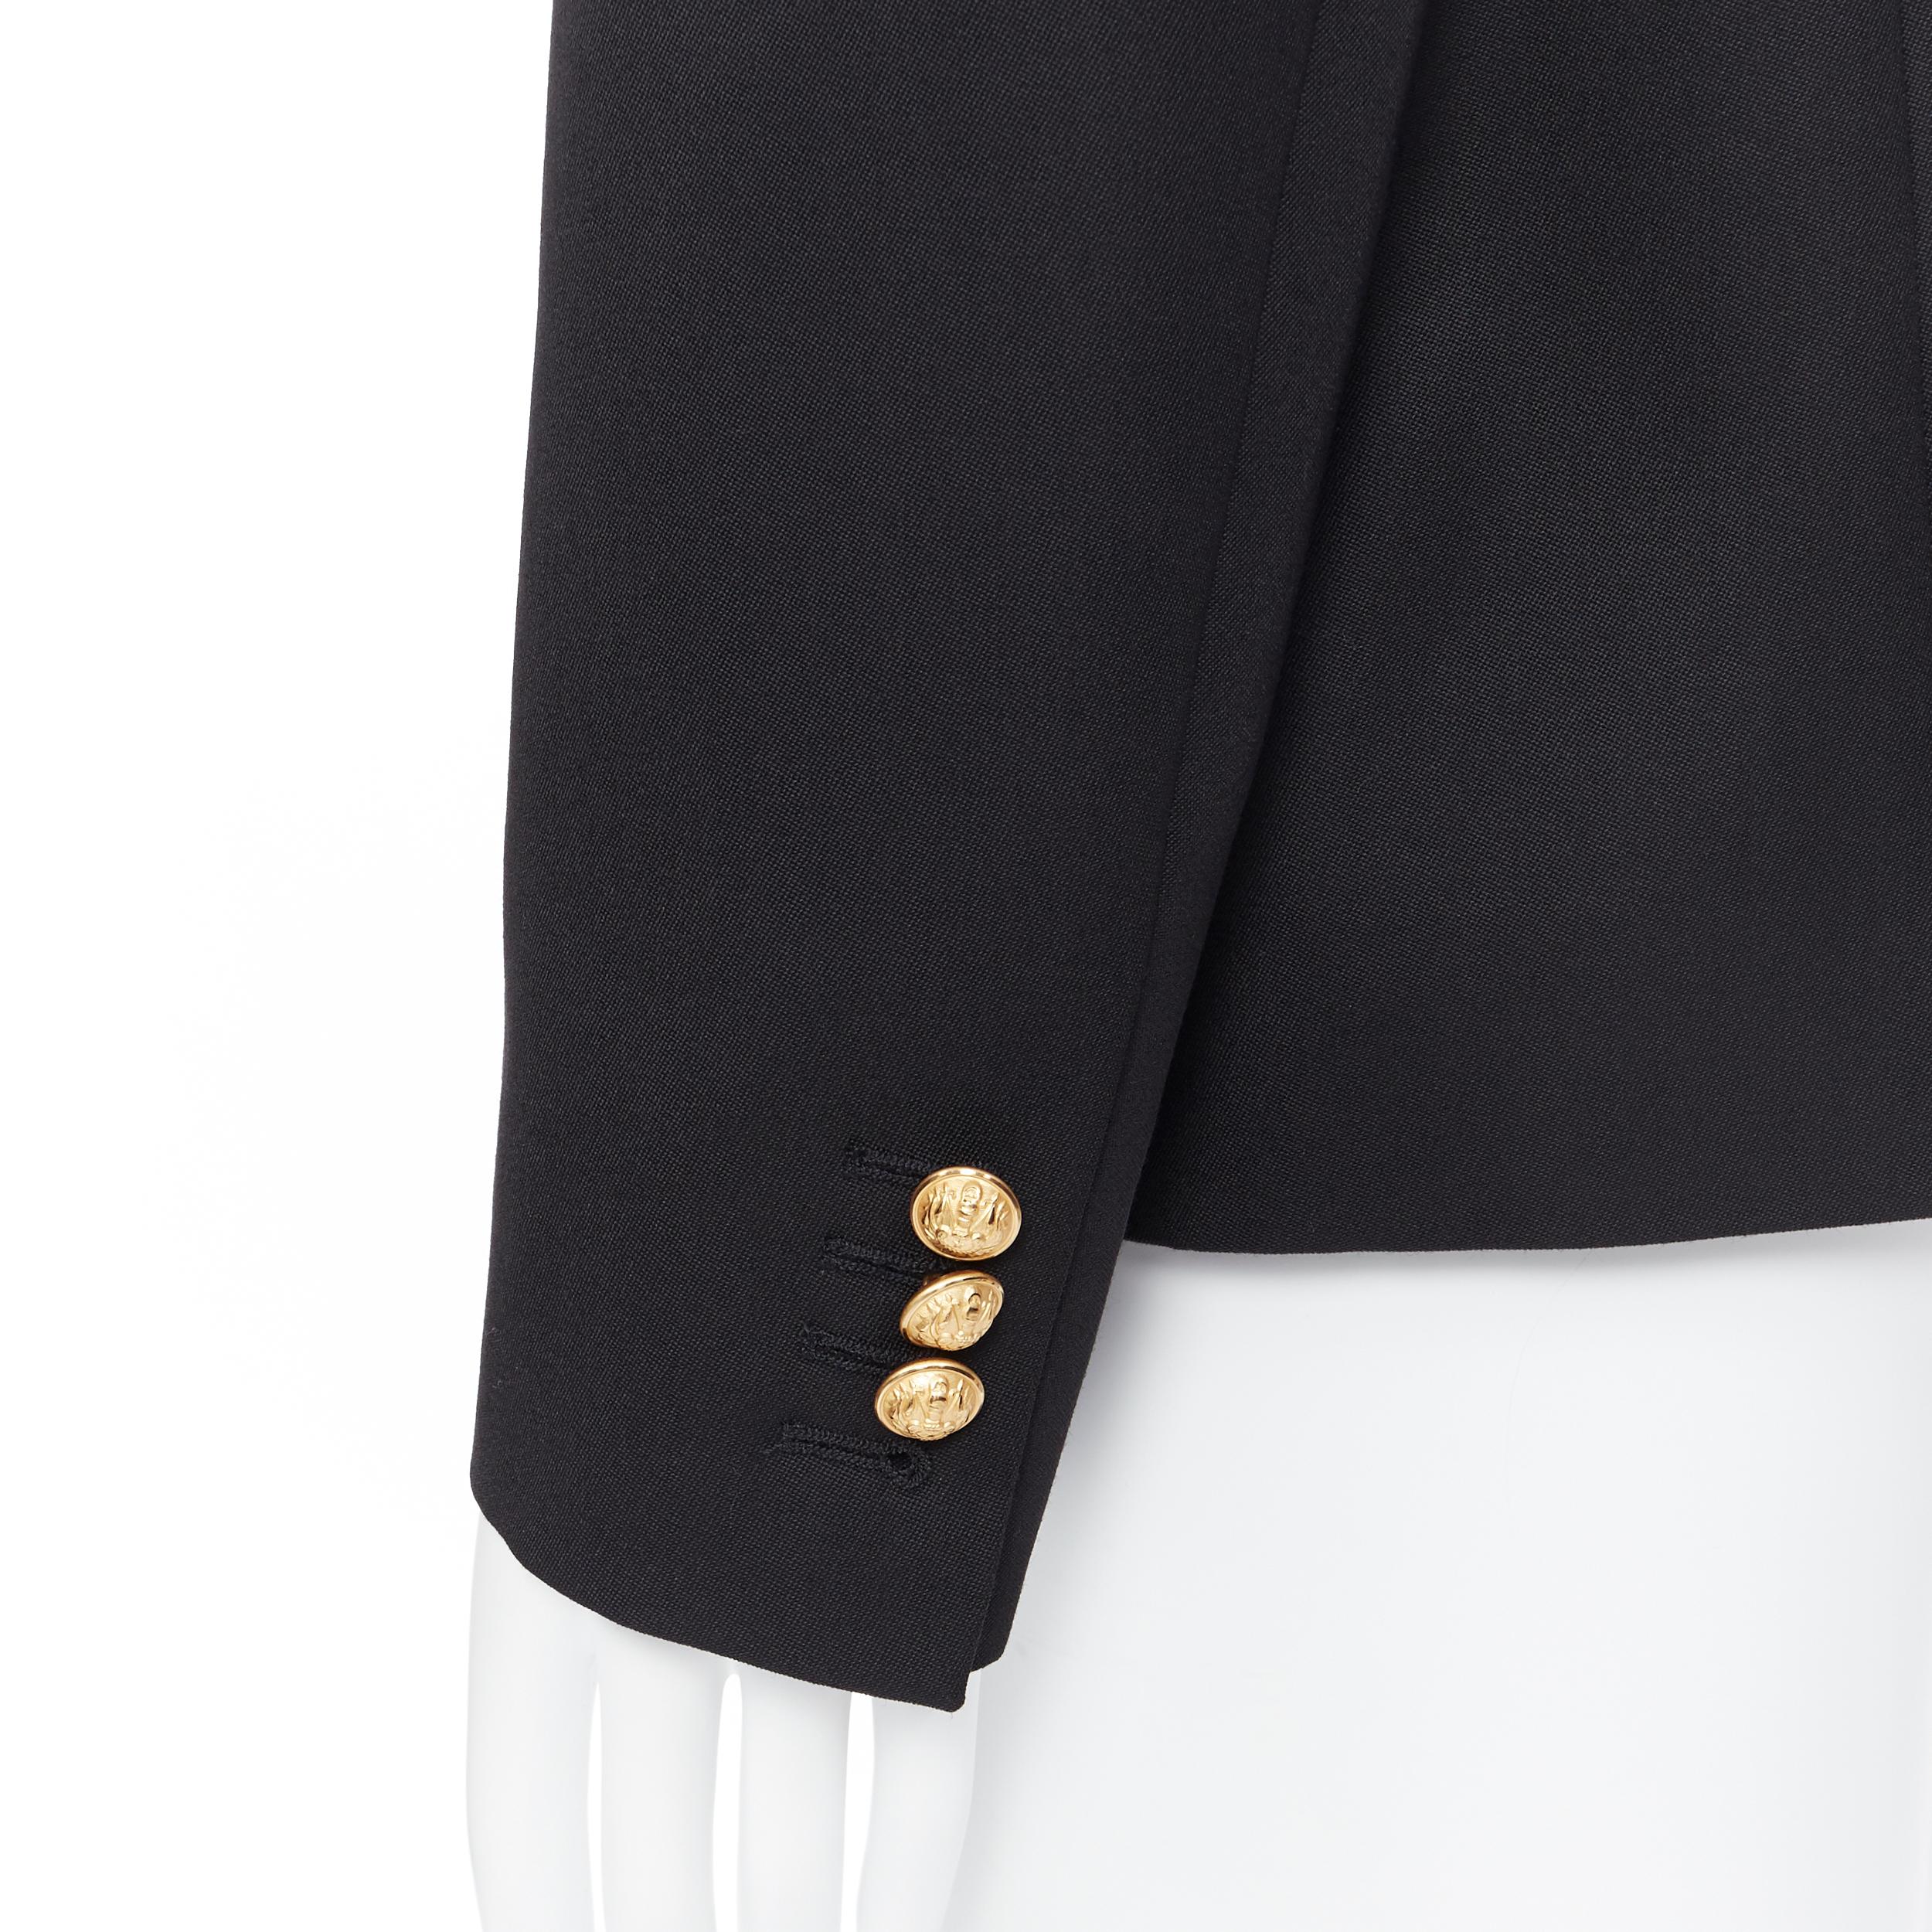 new BALMAIN black wool silk satin shawl lapel military button blazer jacket EU54
Reference: TGAS/A05415
Brand: Balmain
Designer: Olivier Rousteing
Material: Wool
Color: Black
Pattern: Solid
Closure: Button
Extra Detail: BALMAIN style code: